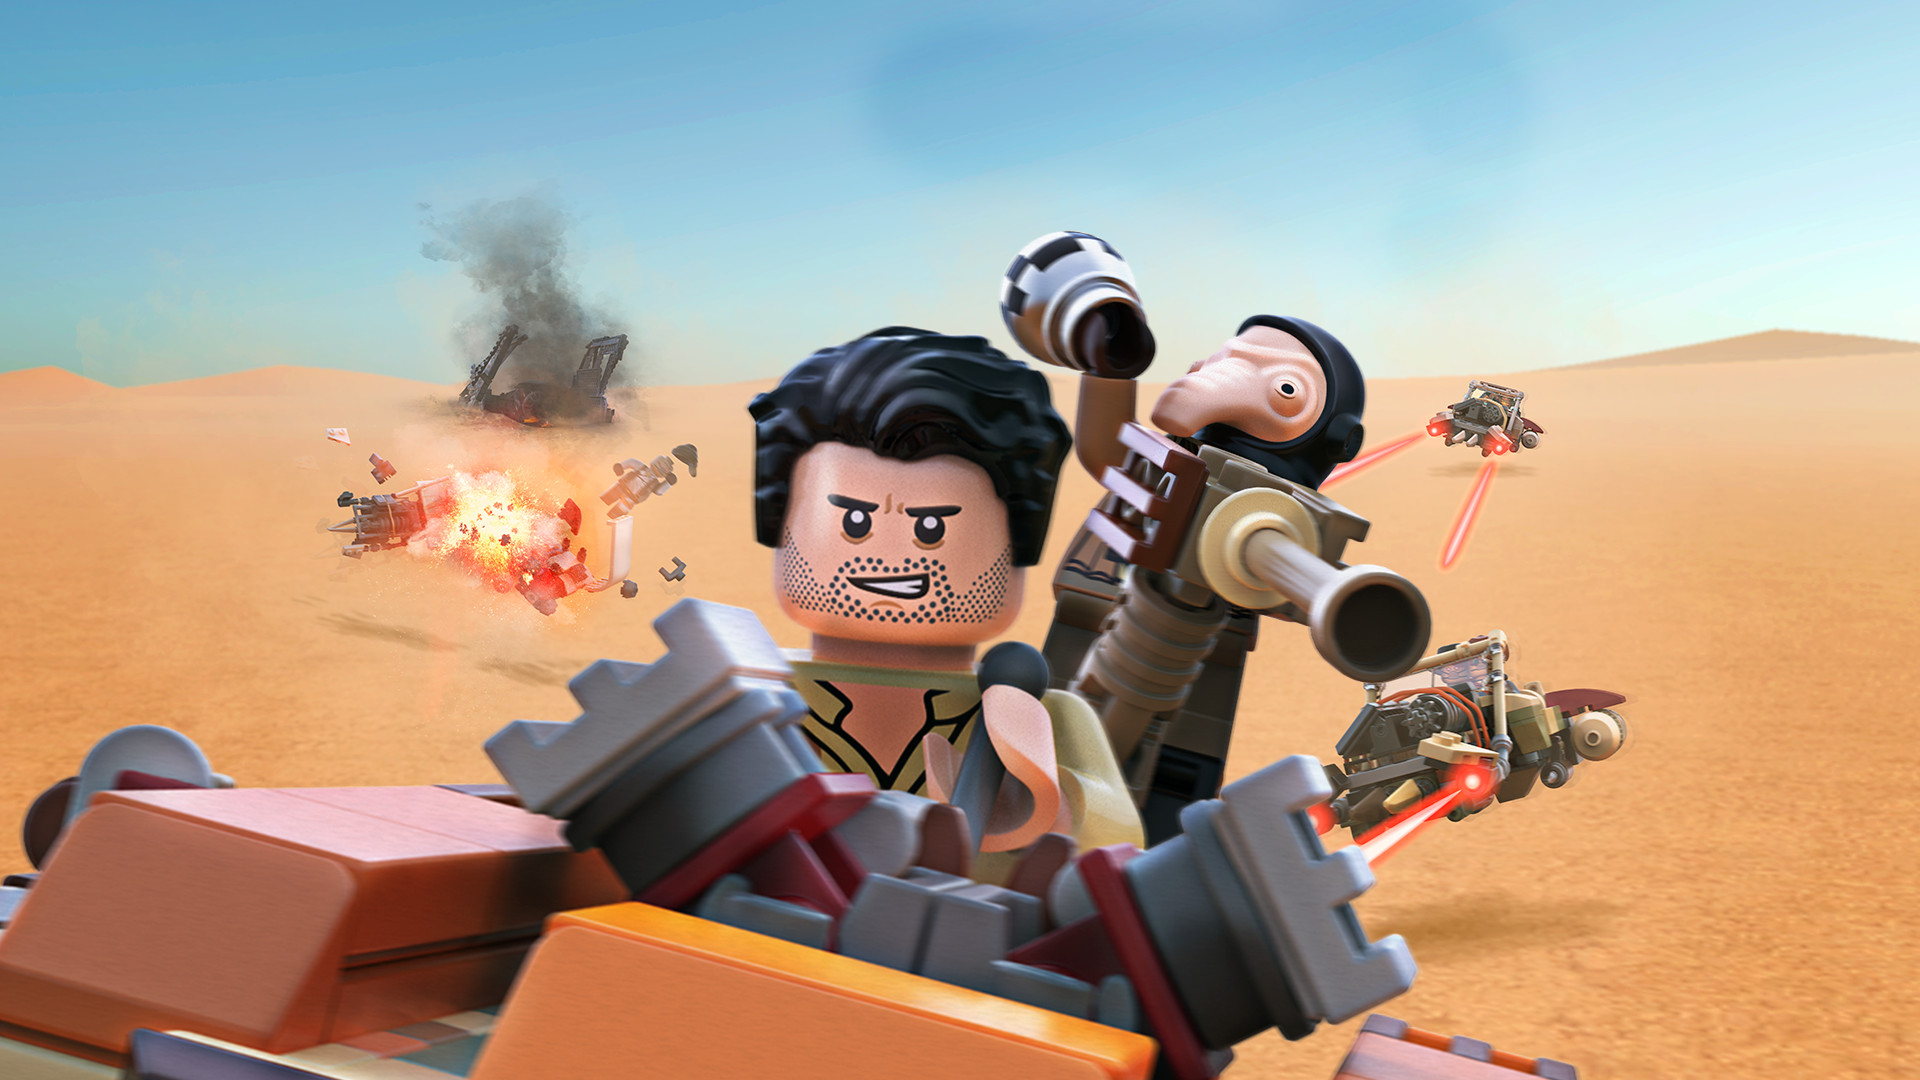 LEGO Star Wars: The Force Awakens - Jakku: Poe's Quest for Survival DLC Steam CD Key, 2.25 usd